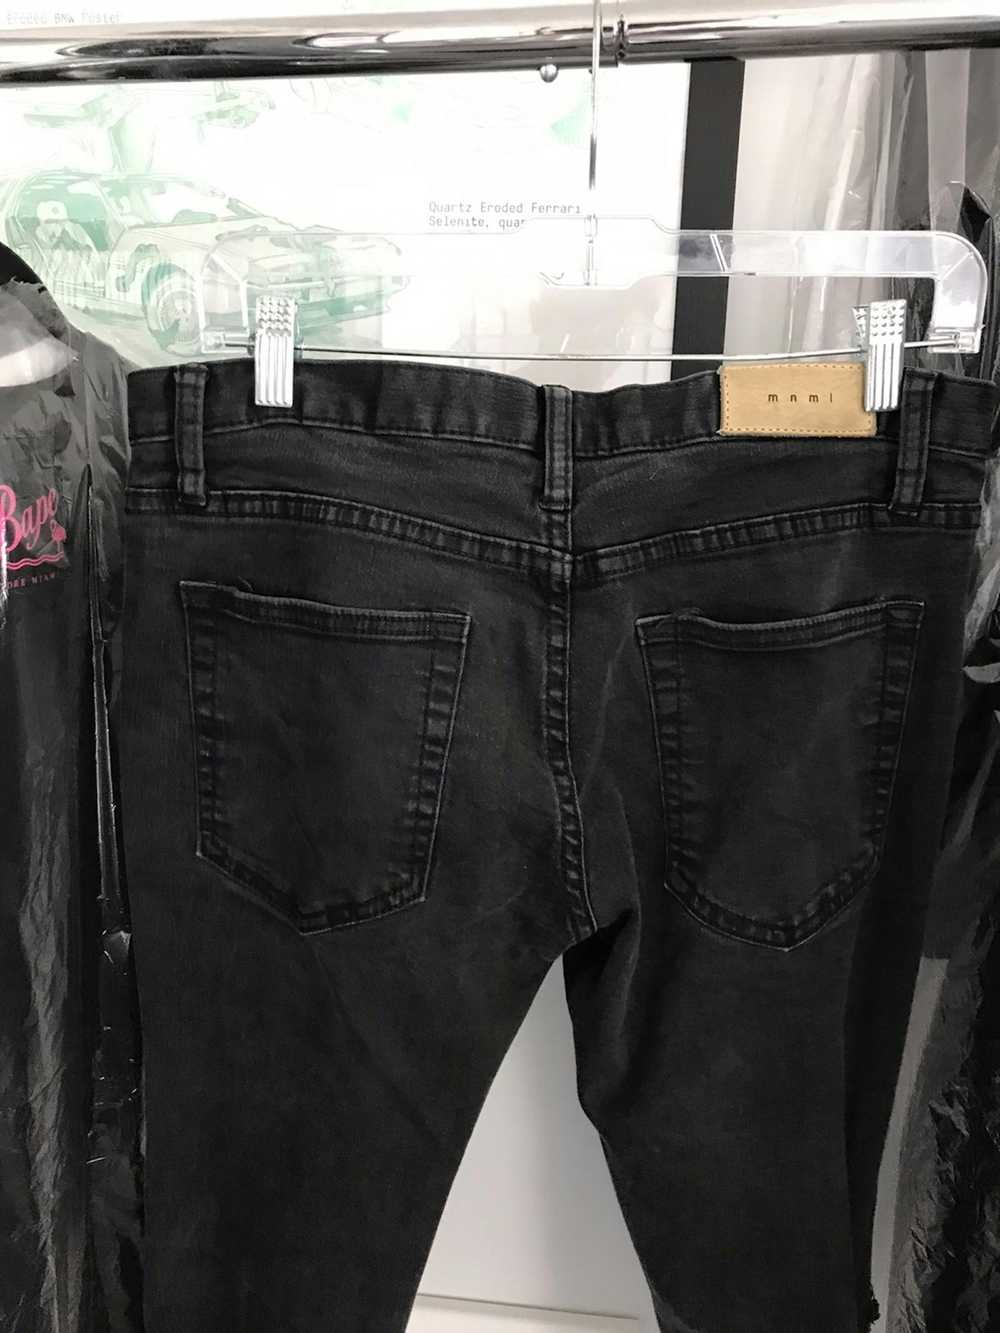 MNML MNML zipper jeans pants size 31 denim - image 3